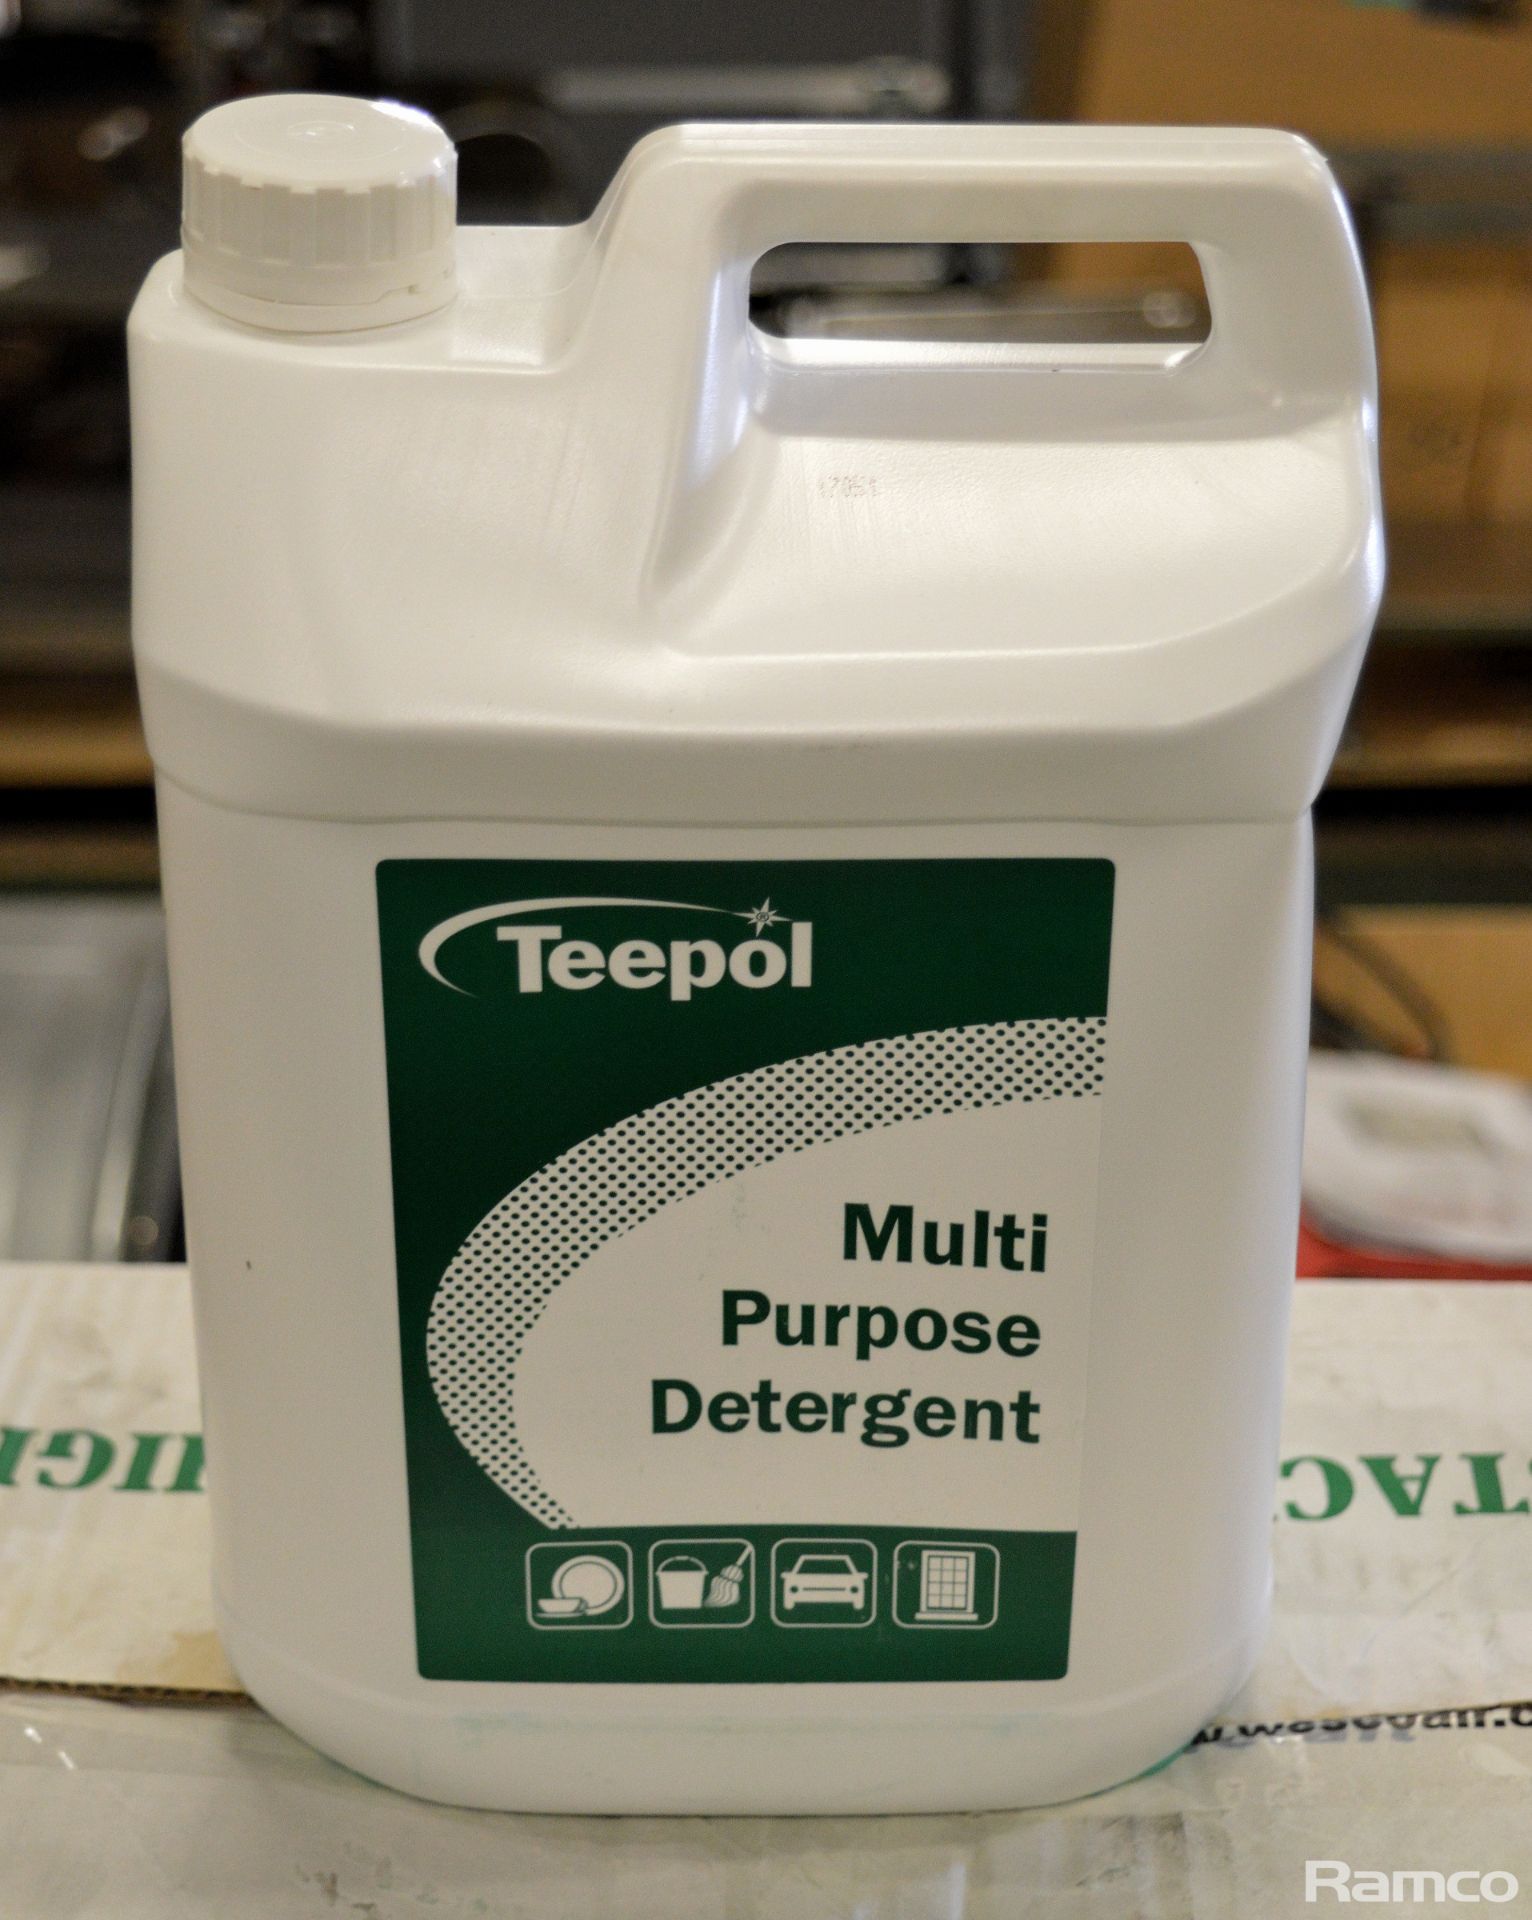 Teepol Multipurpose Detergent - 4x 5ltr Per Box - 21 boxes - Image 2 of 3